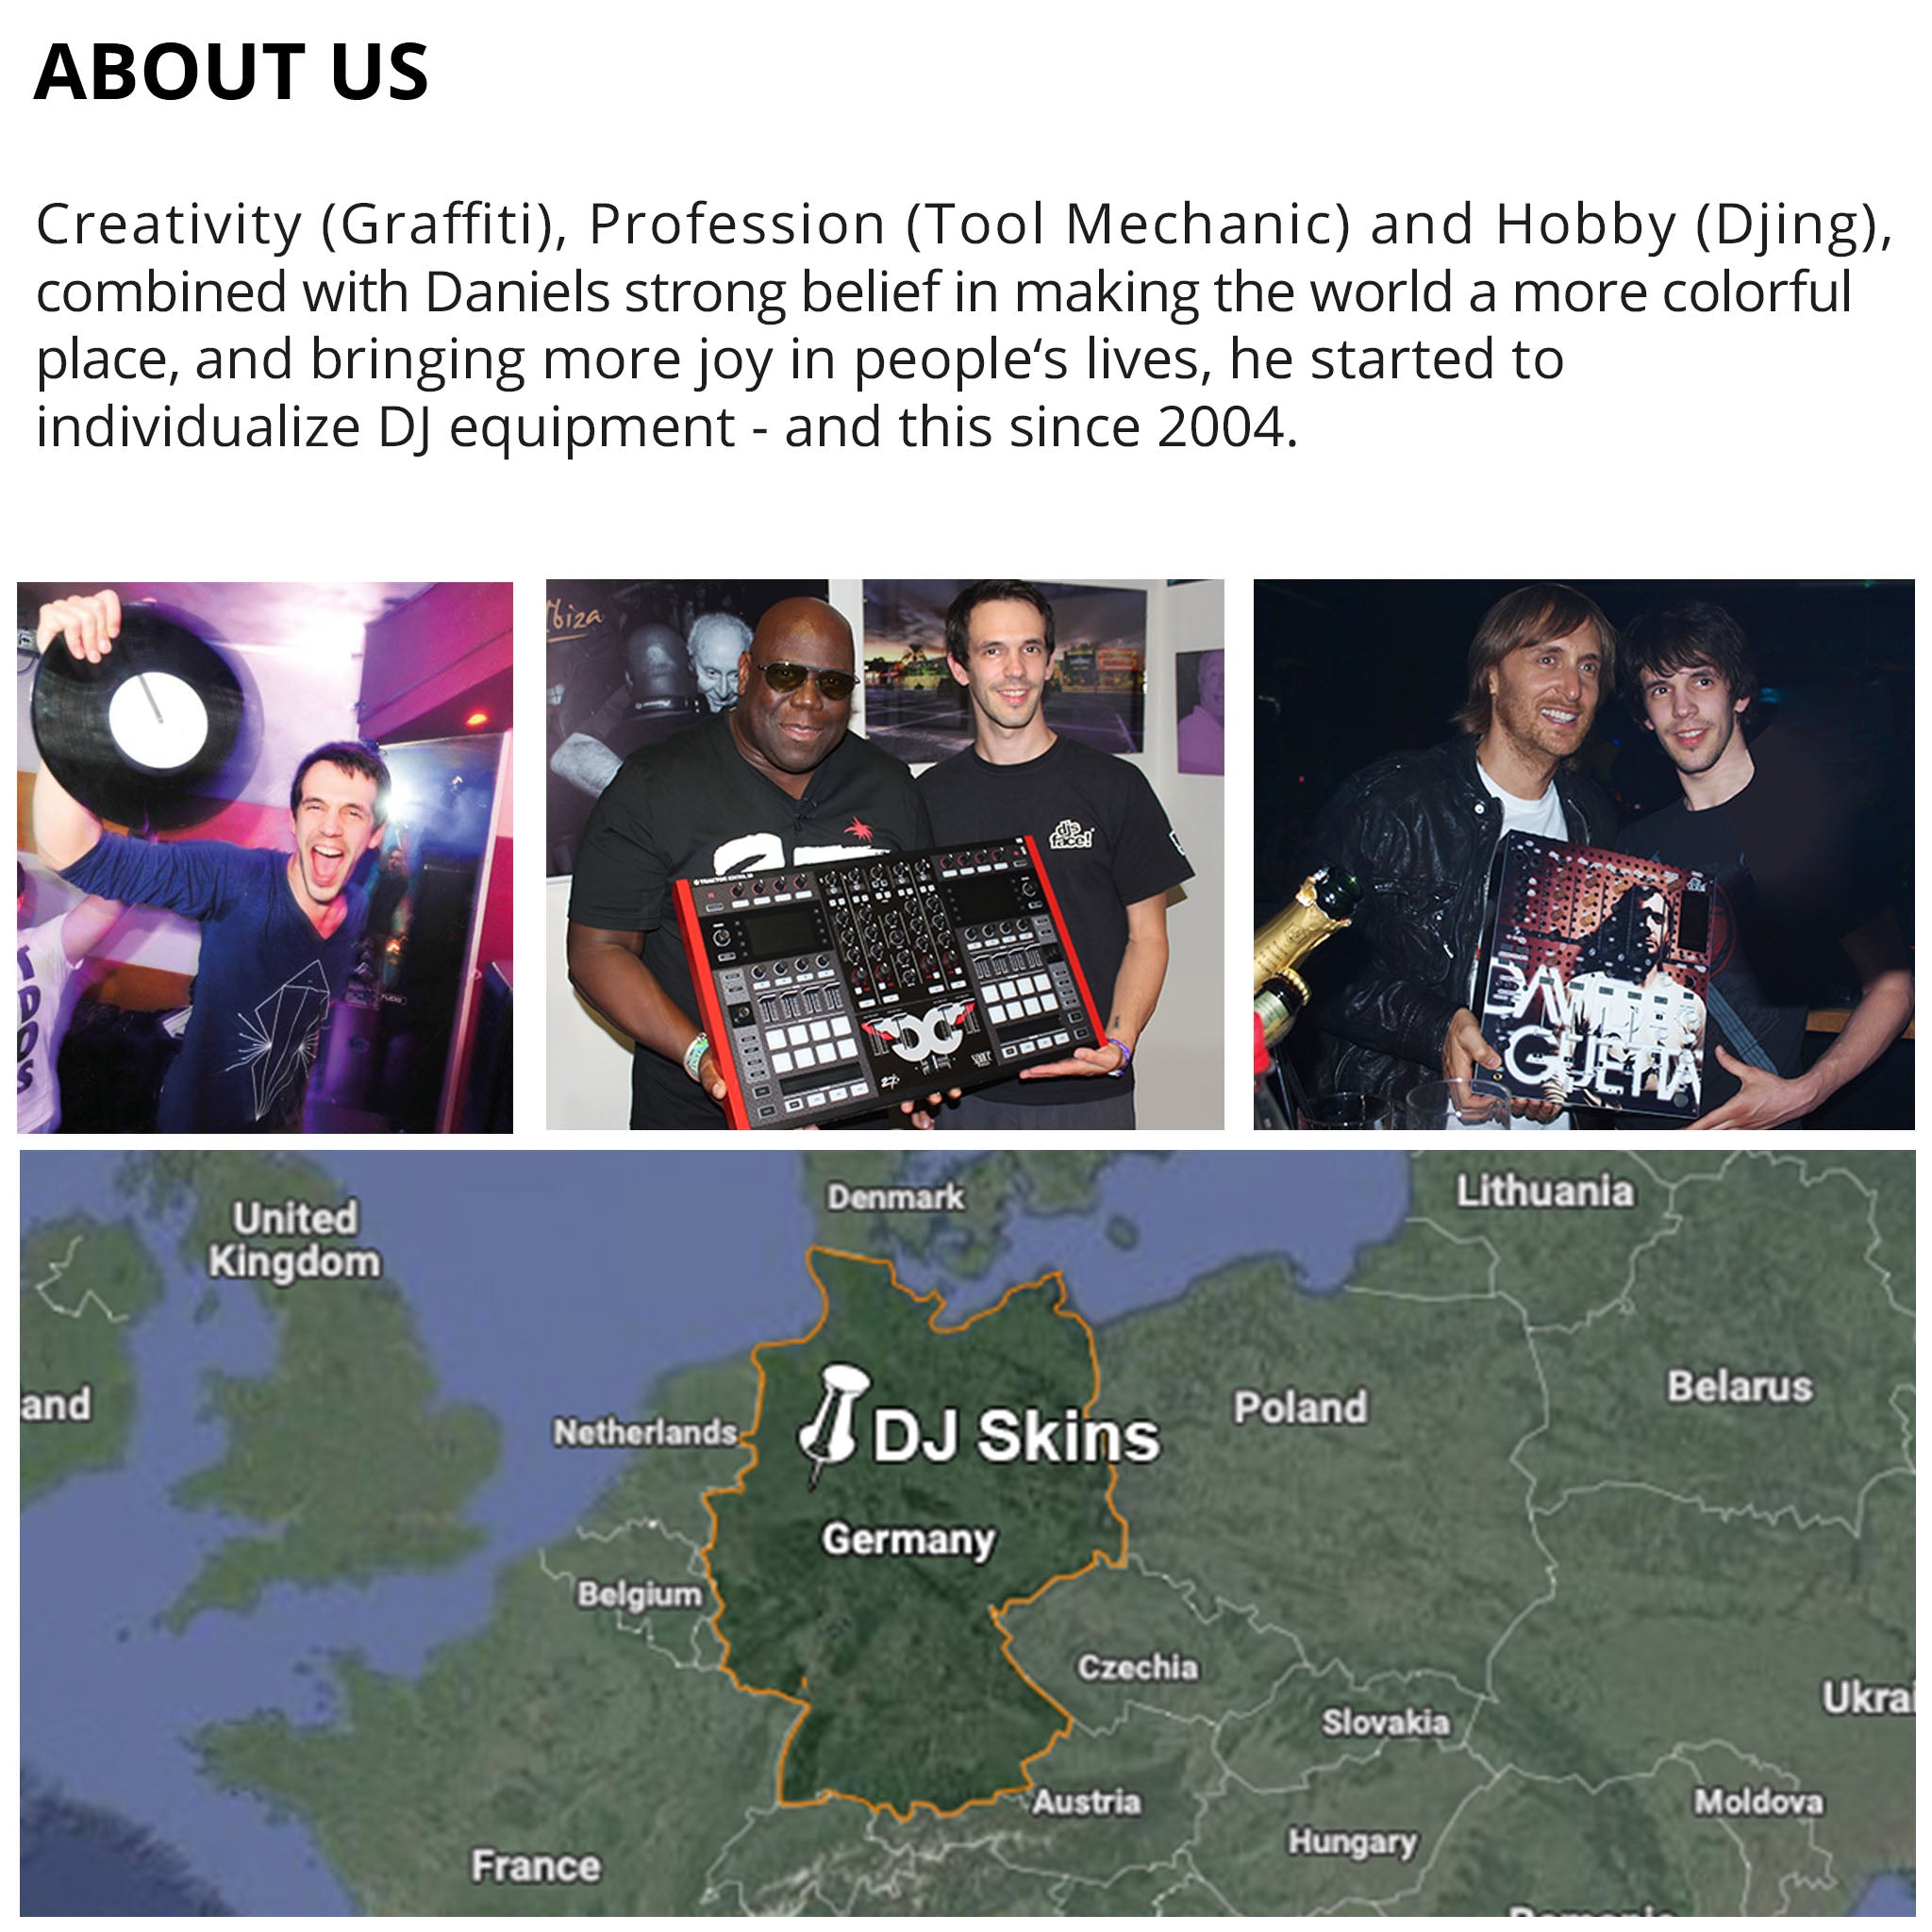 Pioneer DJ CDJ 2000 NEXUS 2 Skin Blacknyellow